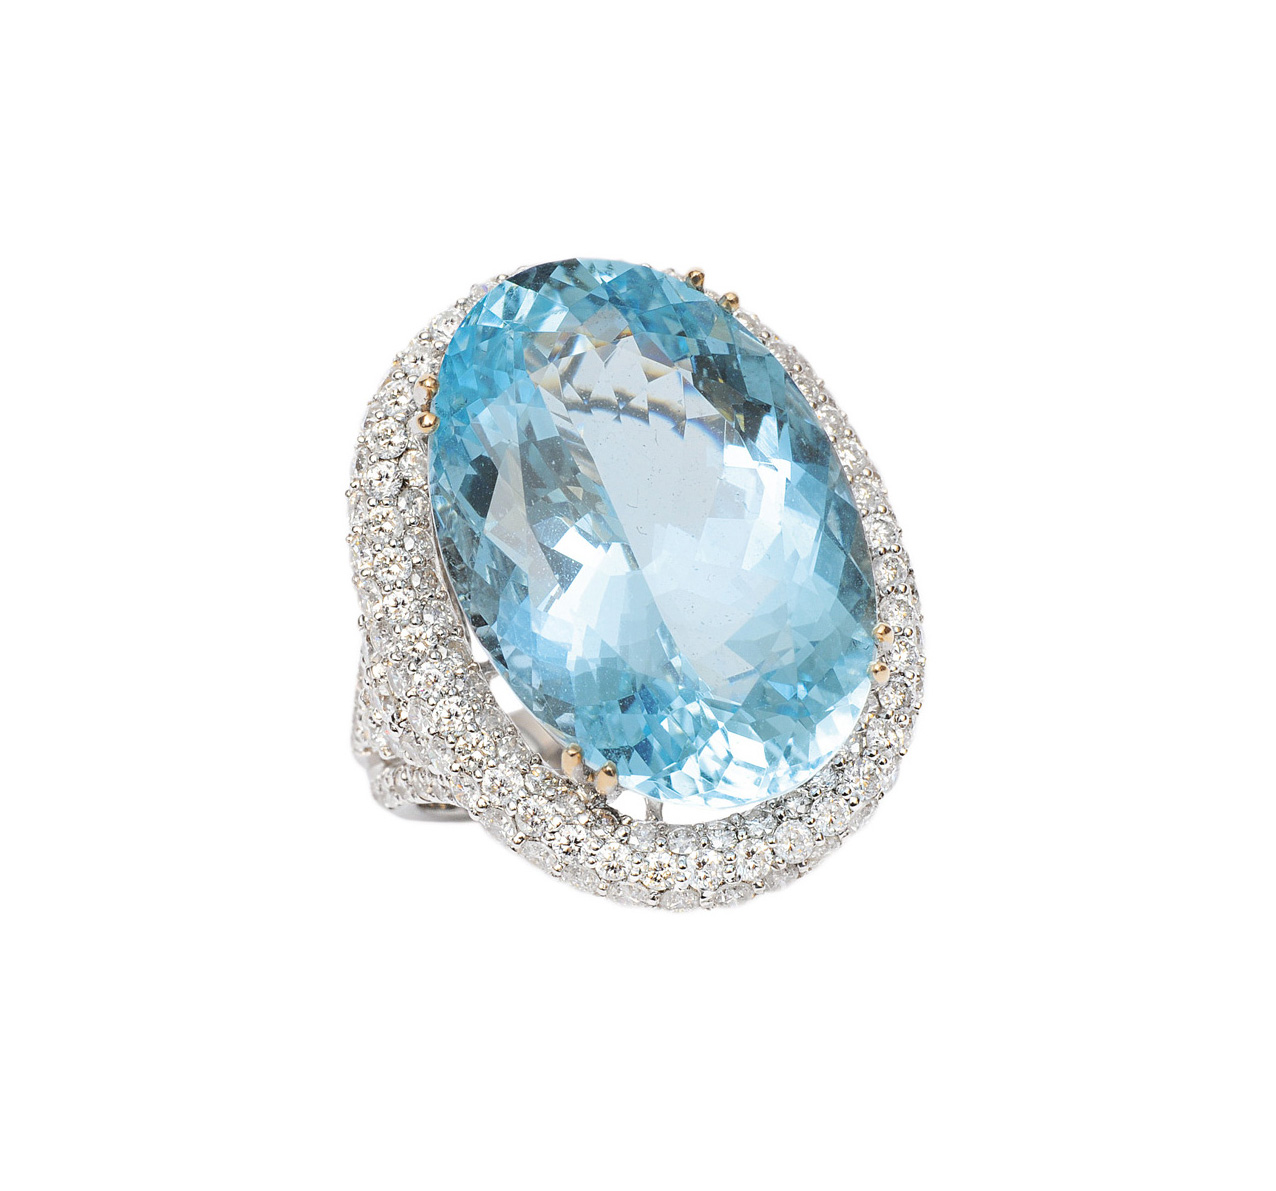 An aquamarin diamond ring